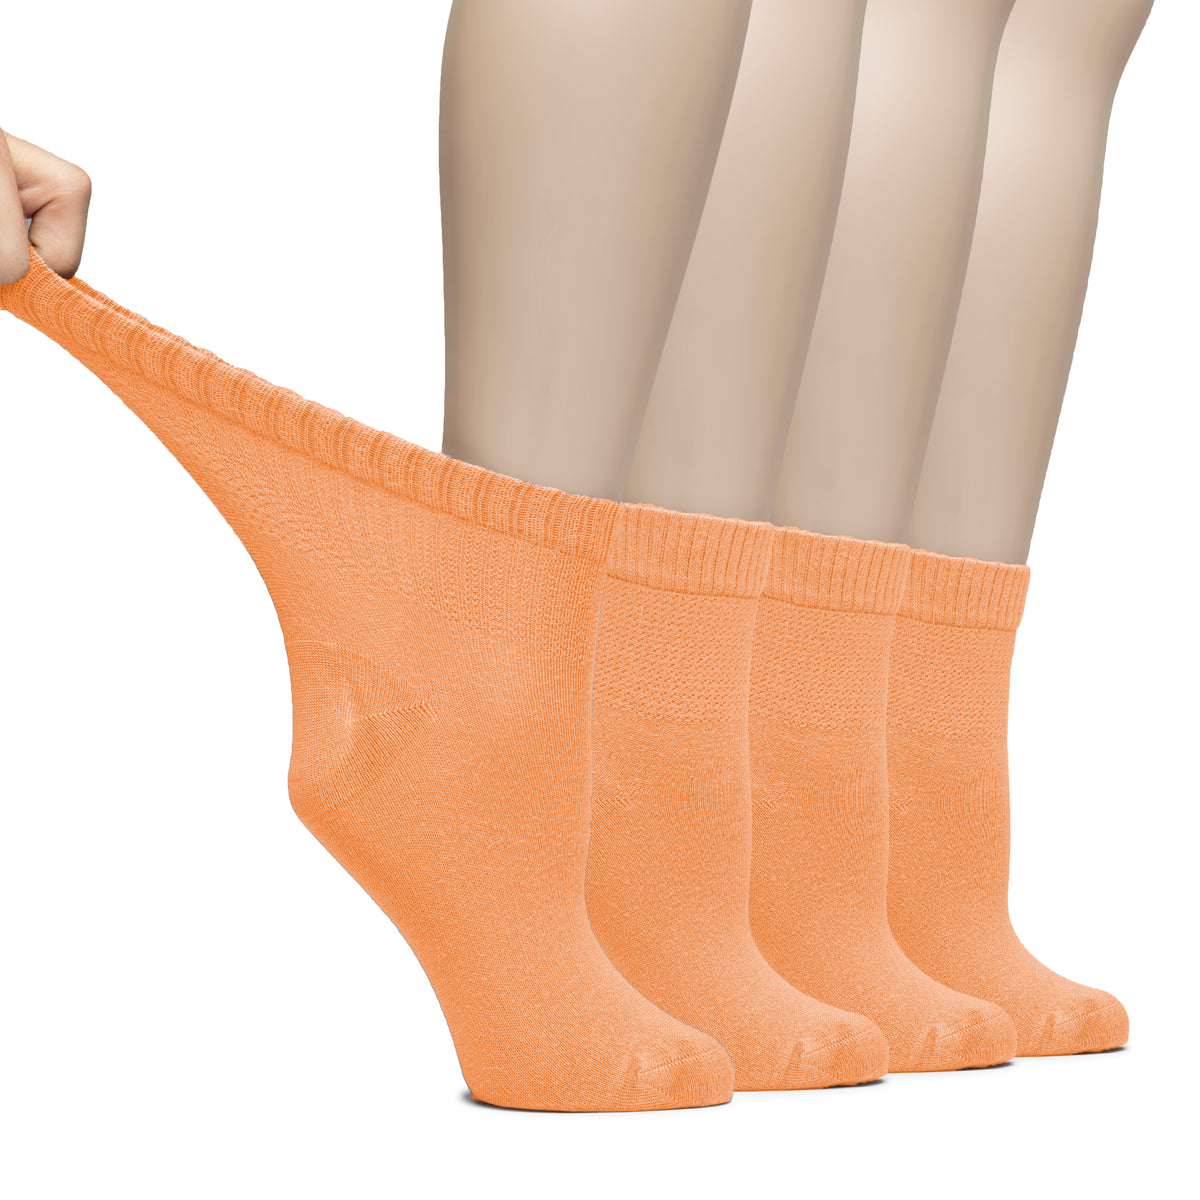 Hugh Ugoli Lightweight Women's Diabetic Ankle Socks Bamboo Thin Socks Seamless Toe and Non-Binding Top, 4 Pairs, , Shoe Size: 6-9/10-12 | Shoe Size: 10-12 | Peach Orange